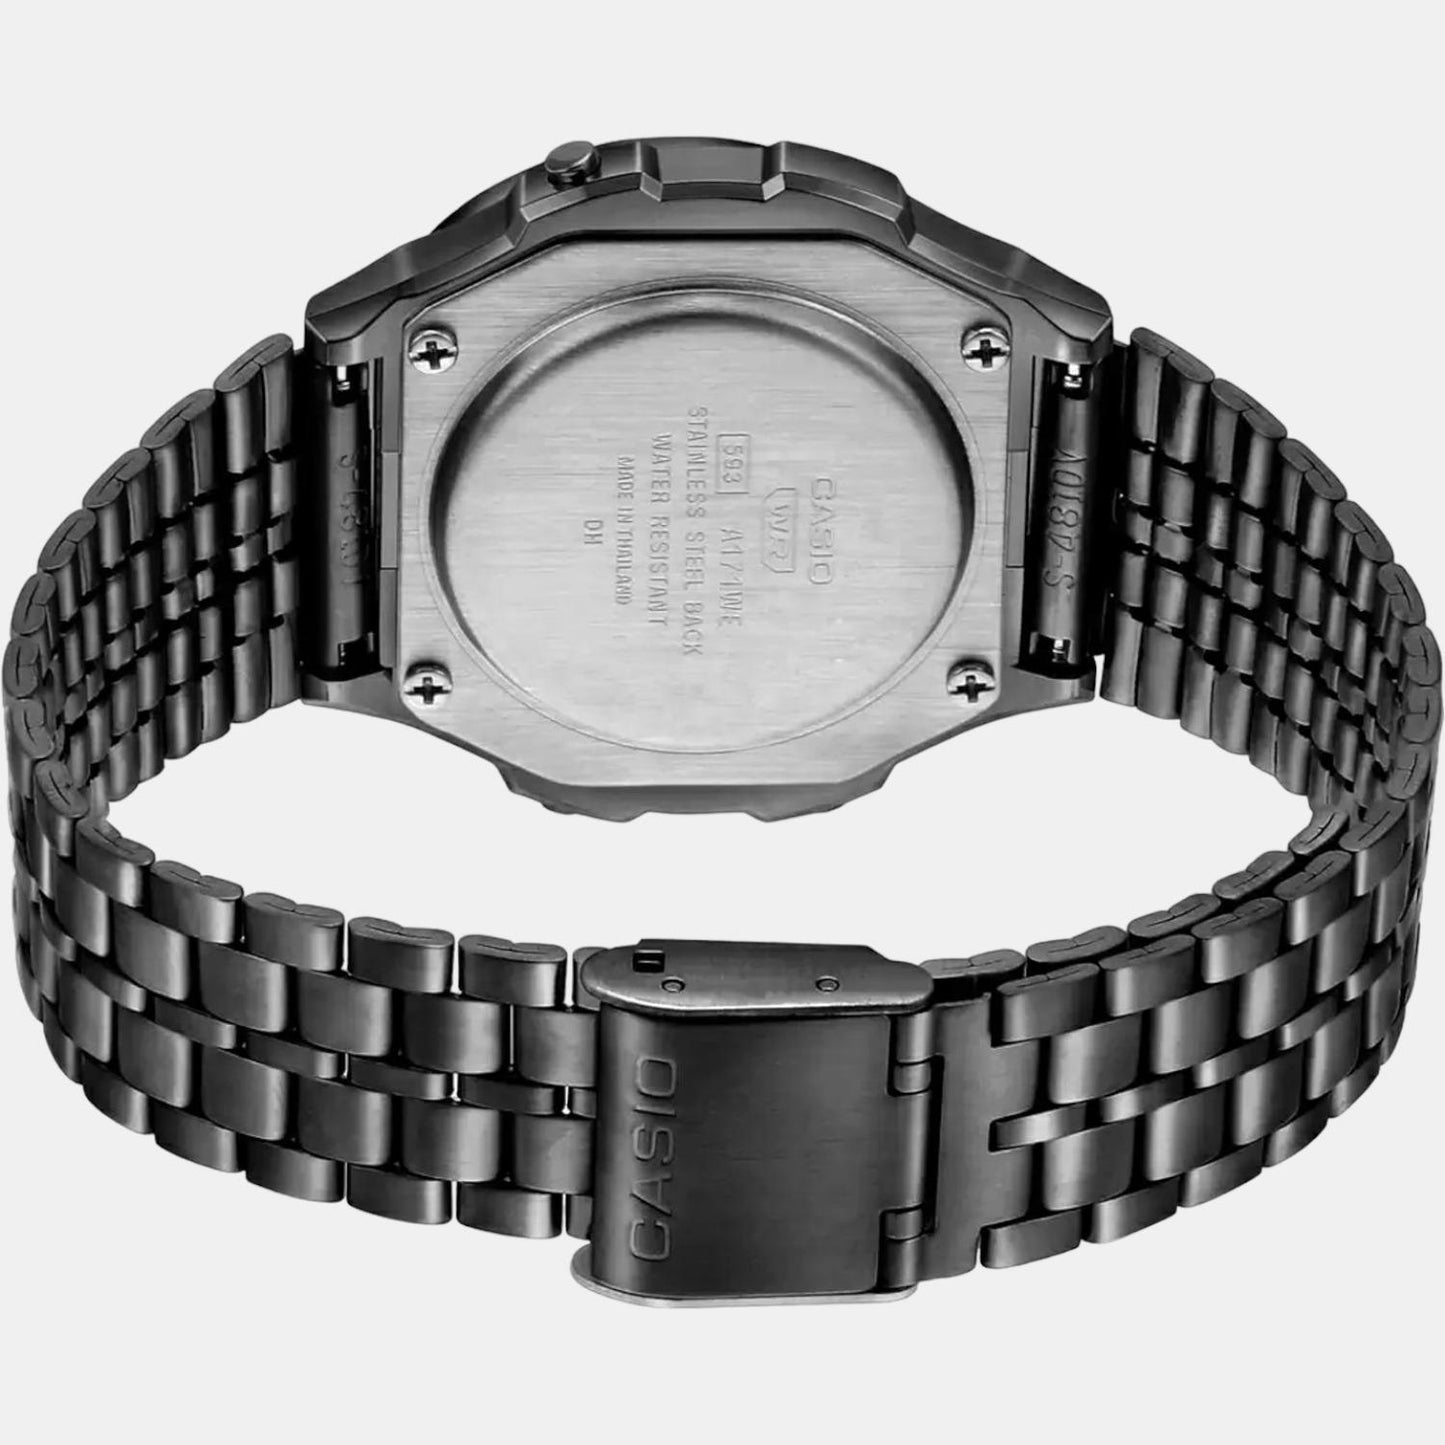 casio-resin-black-digital-unisex-watch-d225